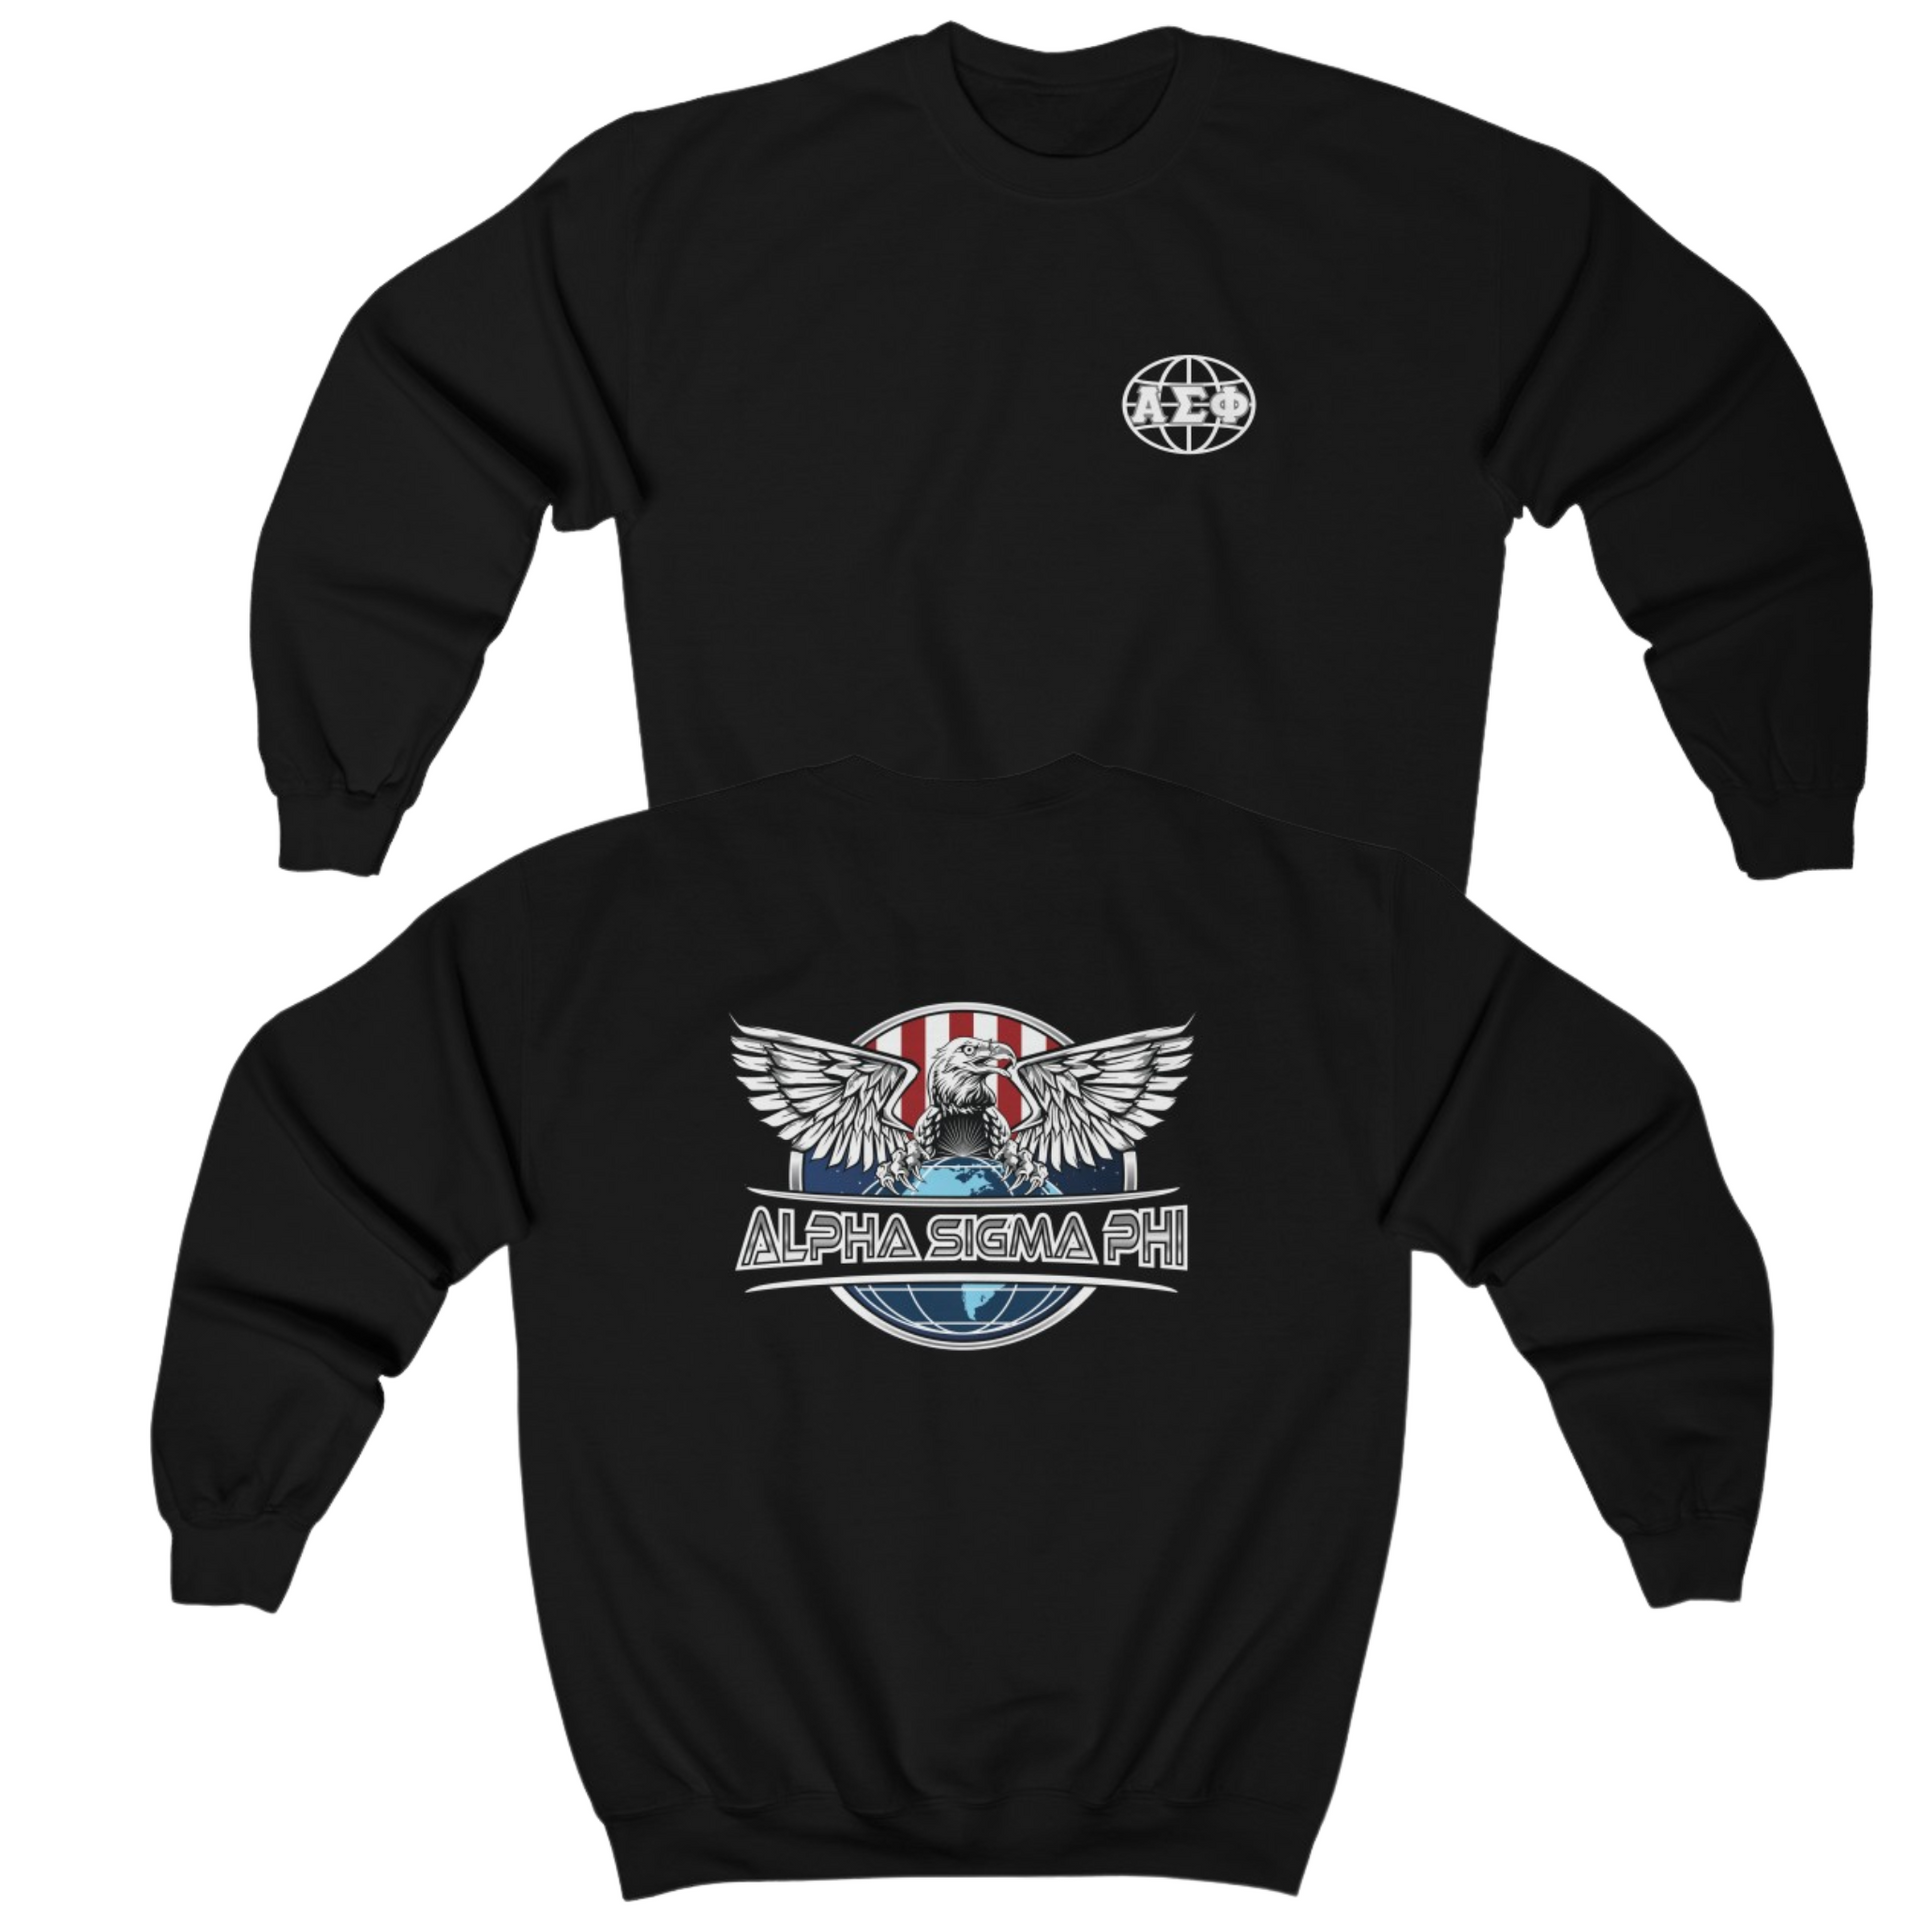 Black Alpha Sigma Phi Graphic Crewneck Sweatshirt | The Fraternal Order | Alpha Sigma Phi Fraternity Clothes 